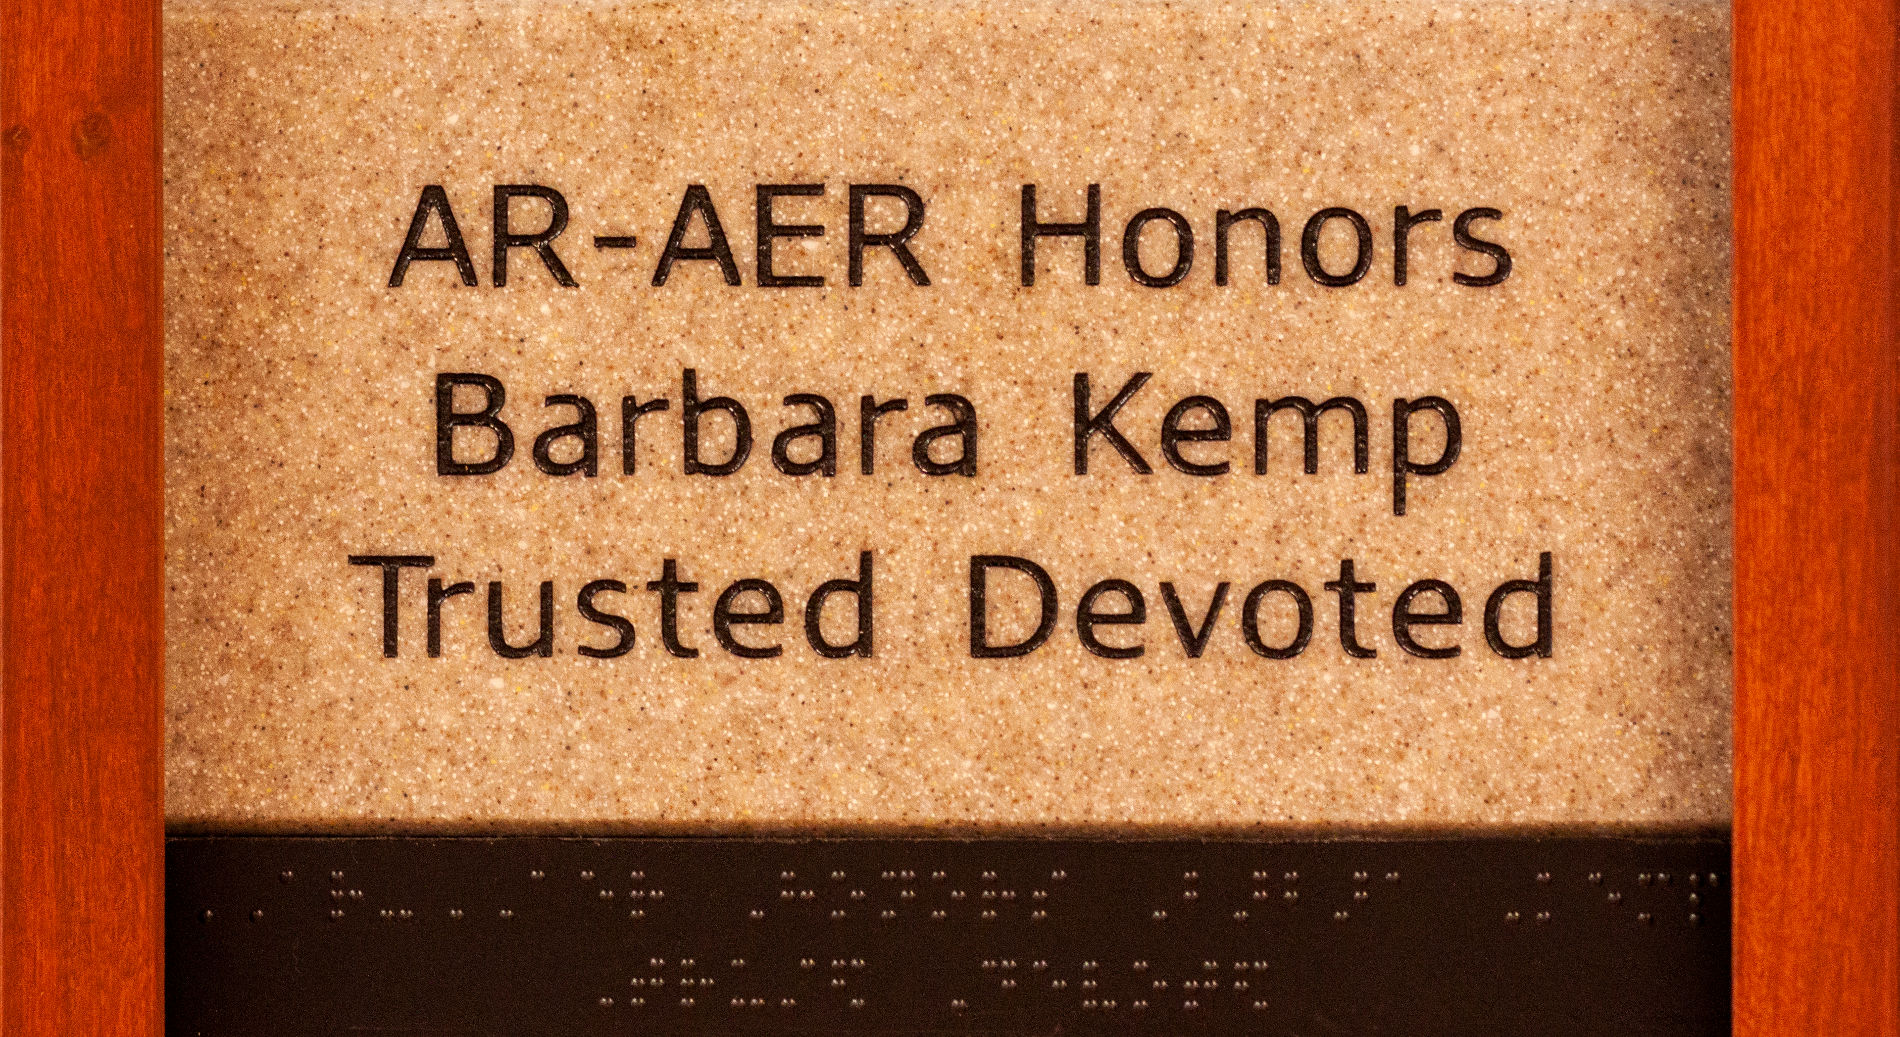 AR-AER Honors Barbara Kemp Trusted Devoted